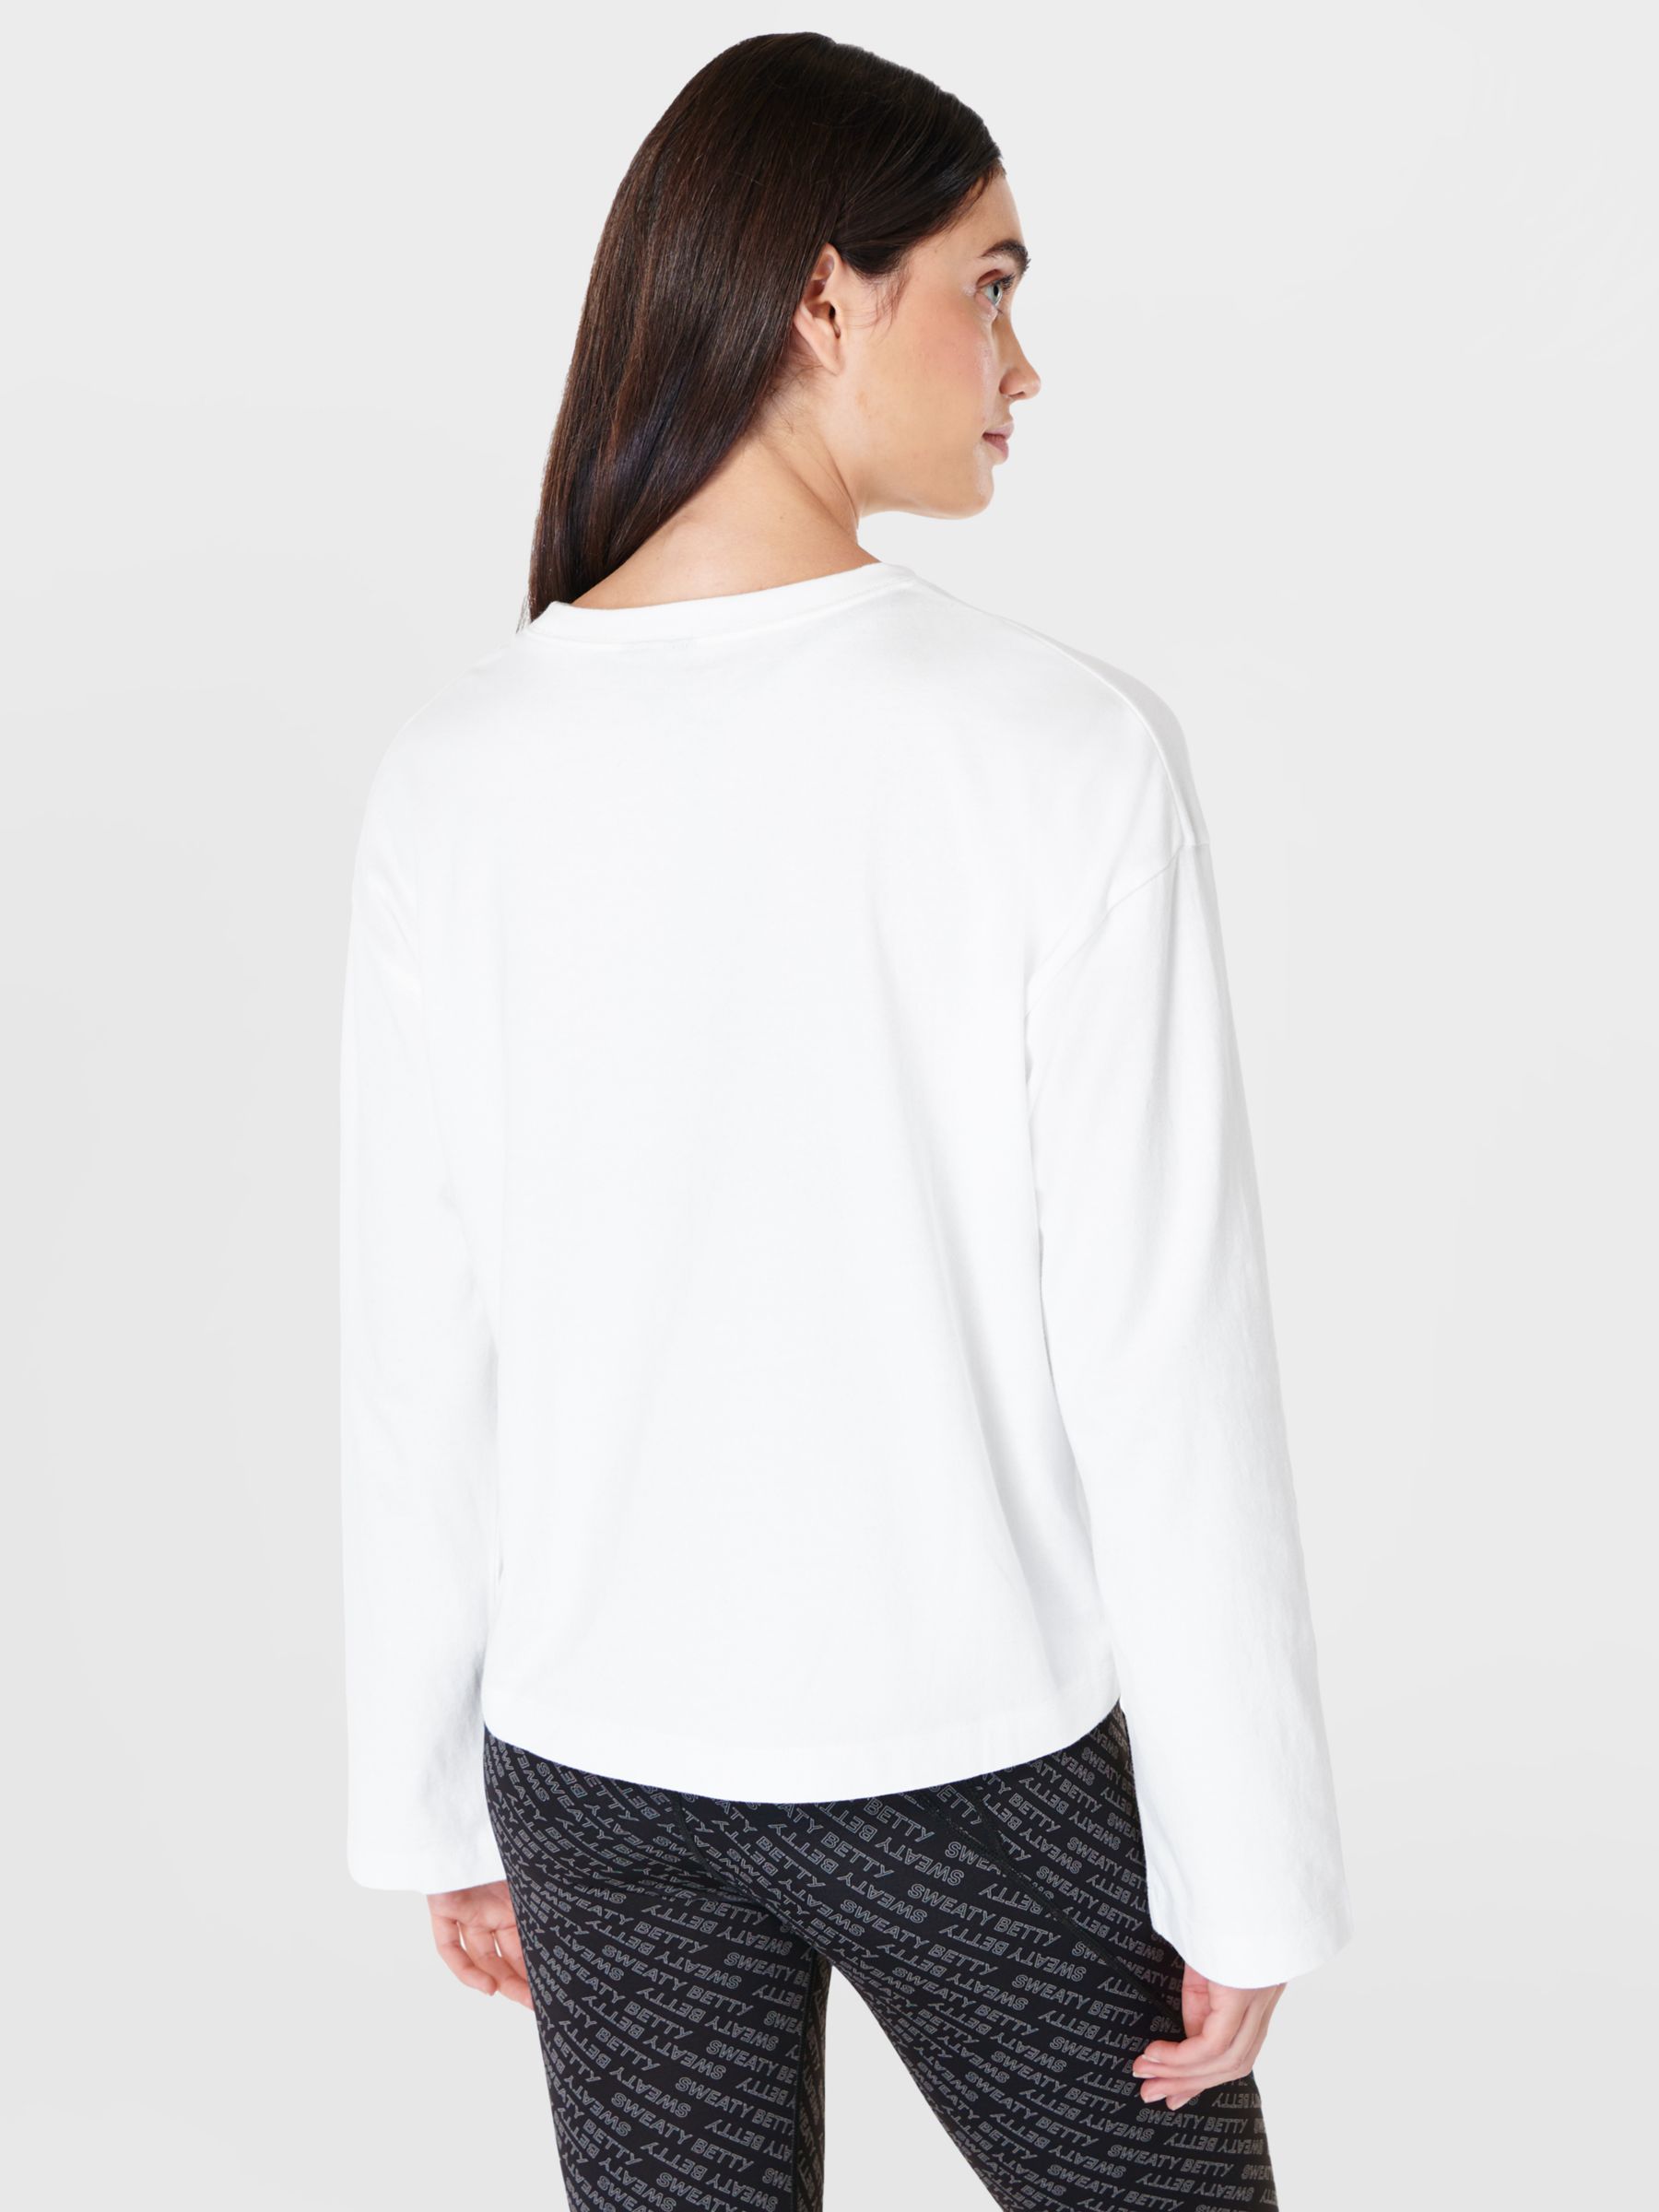 Sweaty Betty Graphic Long Sleeve T-Shirt, White, XS